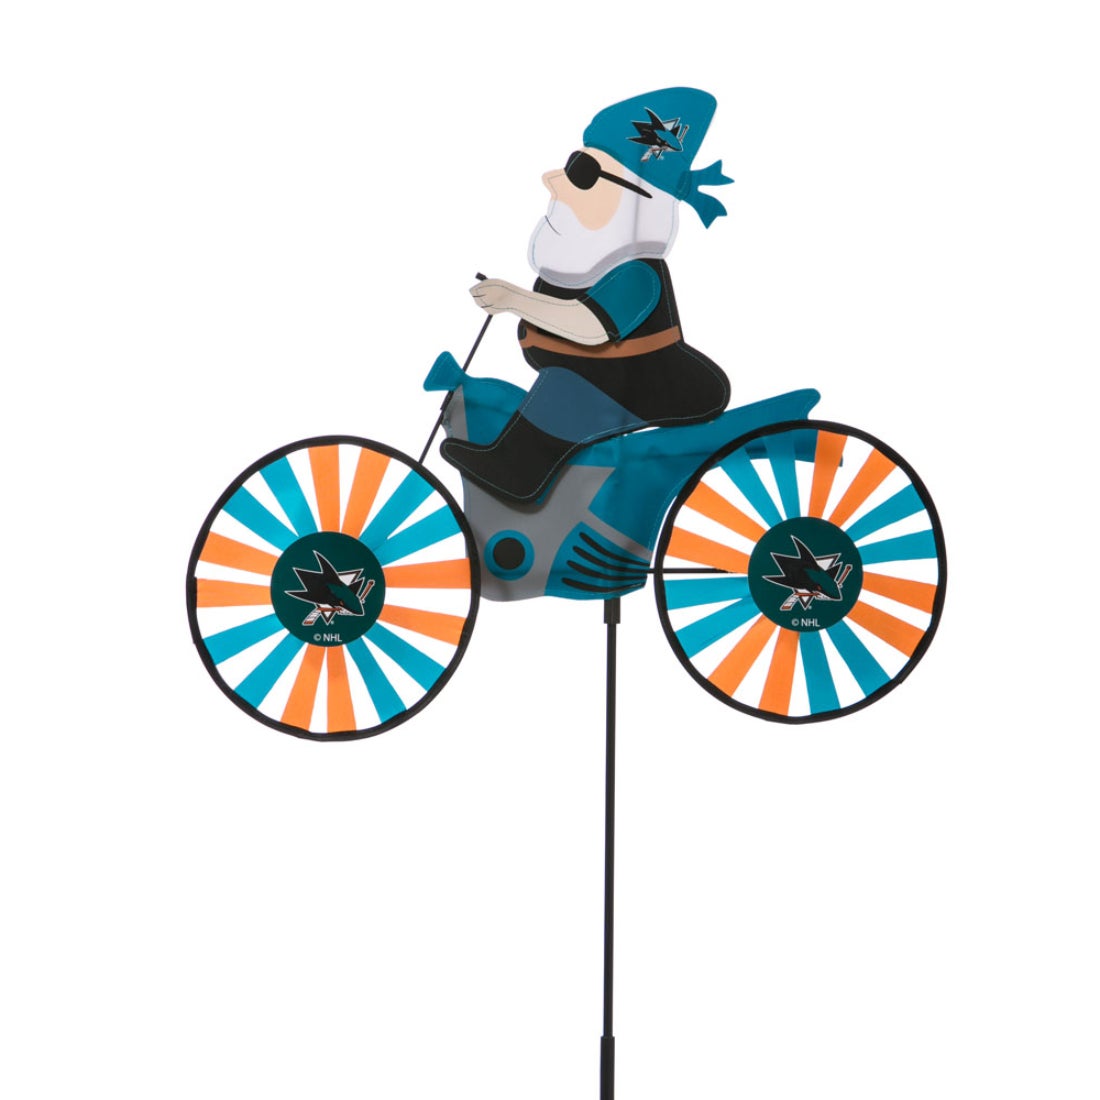 San Jose Sharks Motorcycle Riding Garden Gnome Wind Spinner